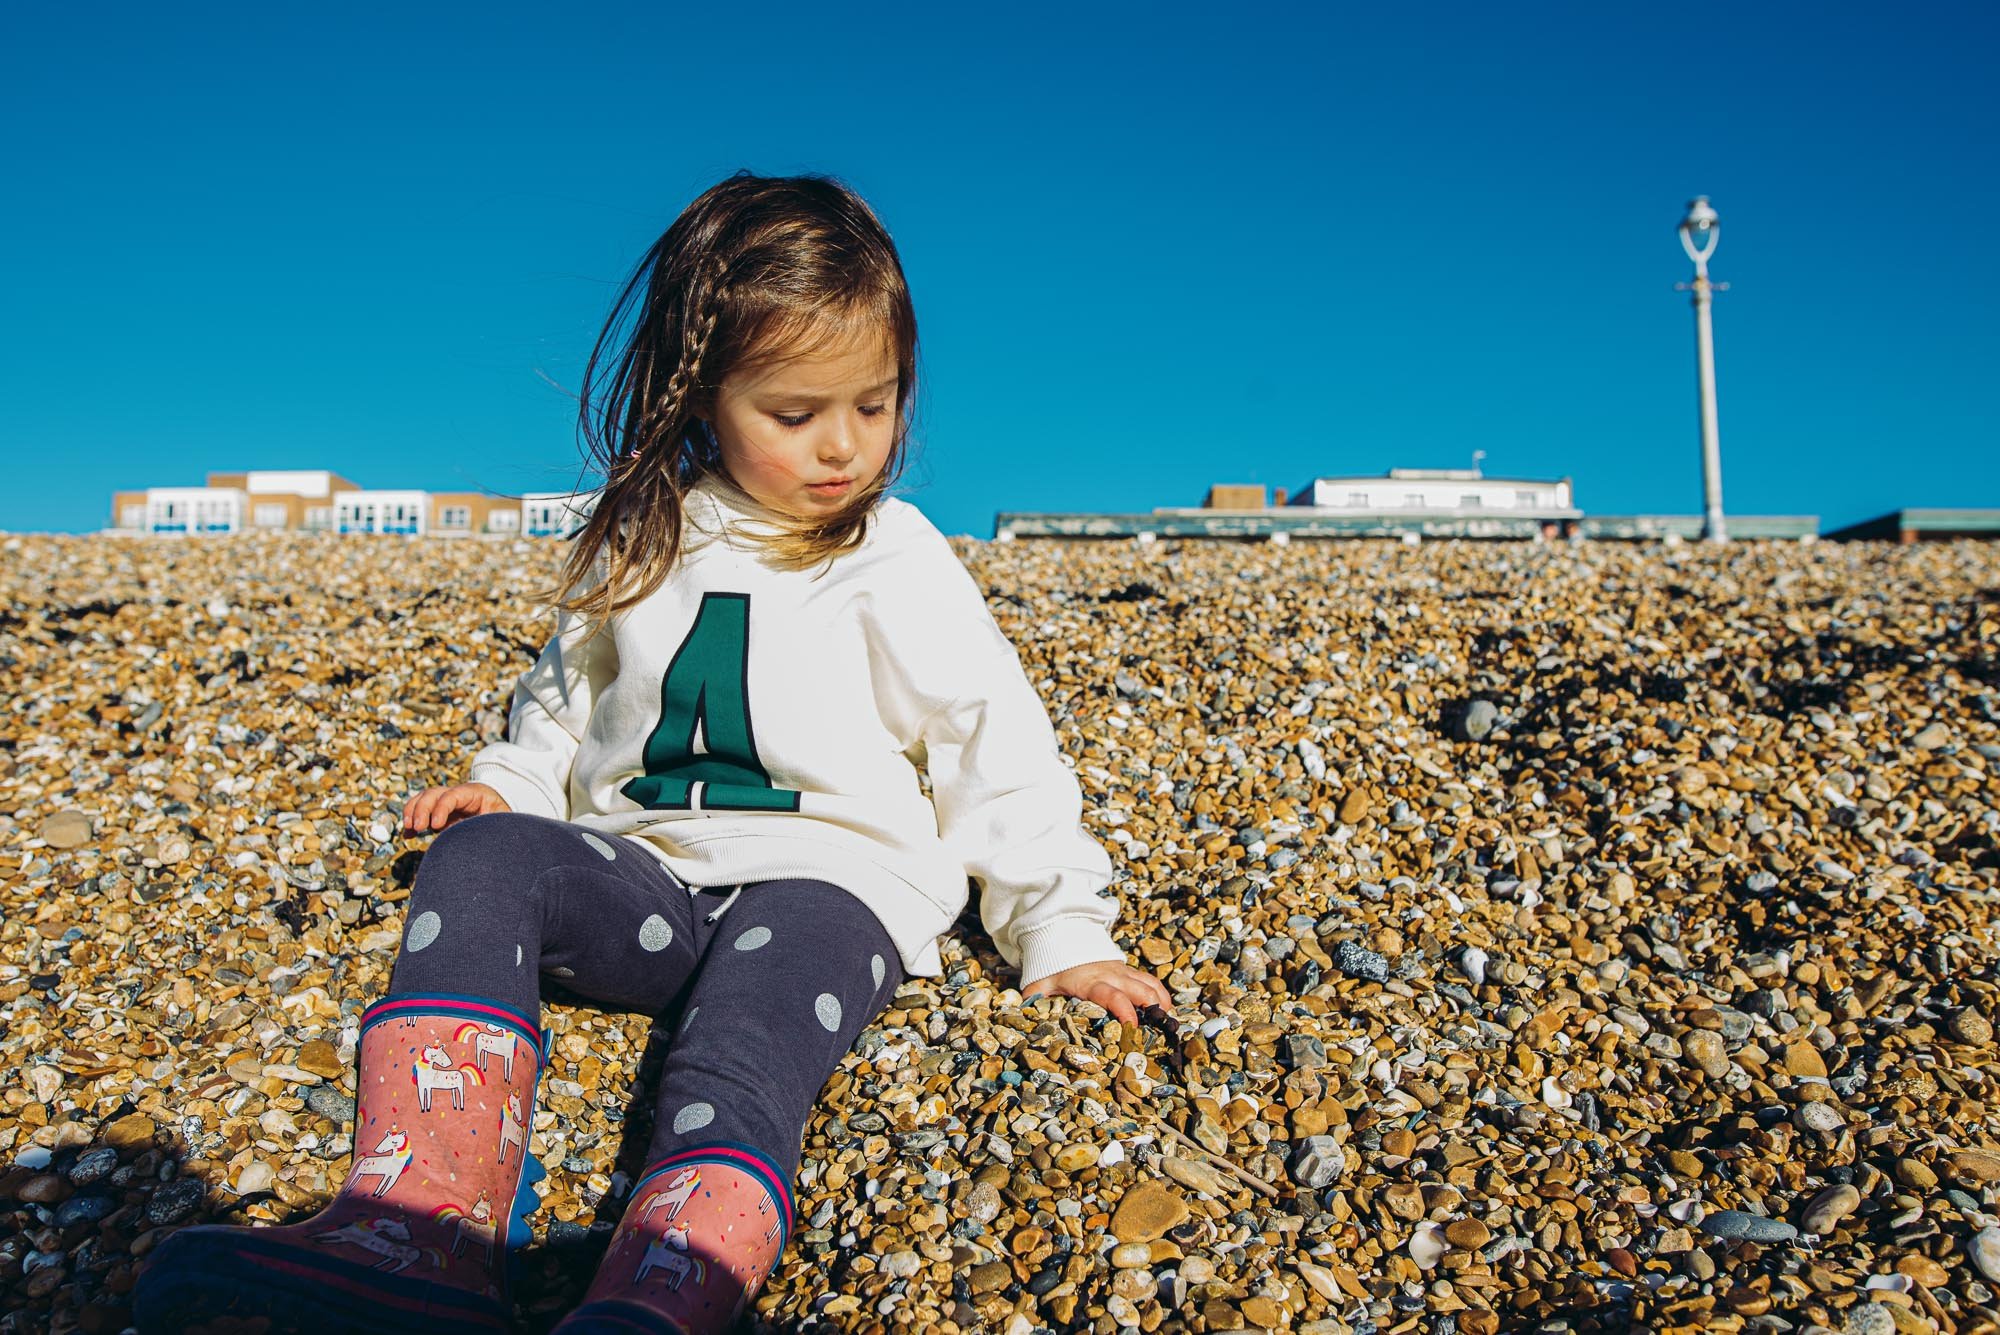 family-portrait-girl-playing-beach-pebbles-blue-sky-family-photographer-brighton-hove-worthing-lewes.jpg